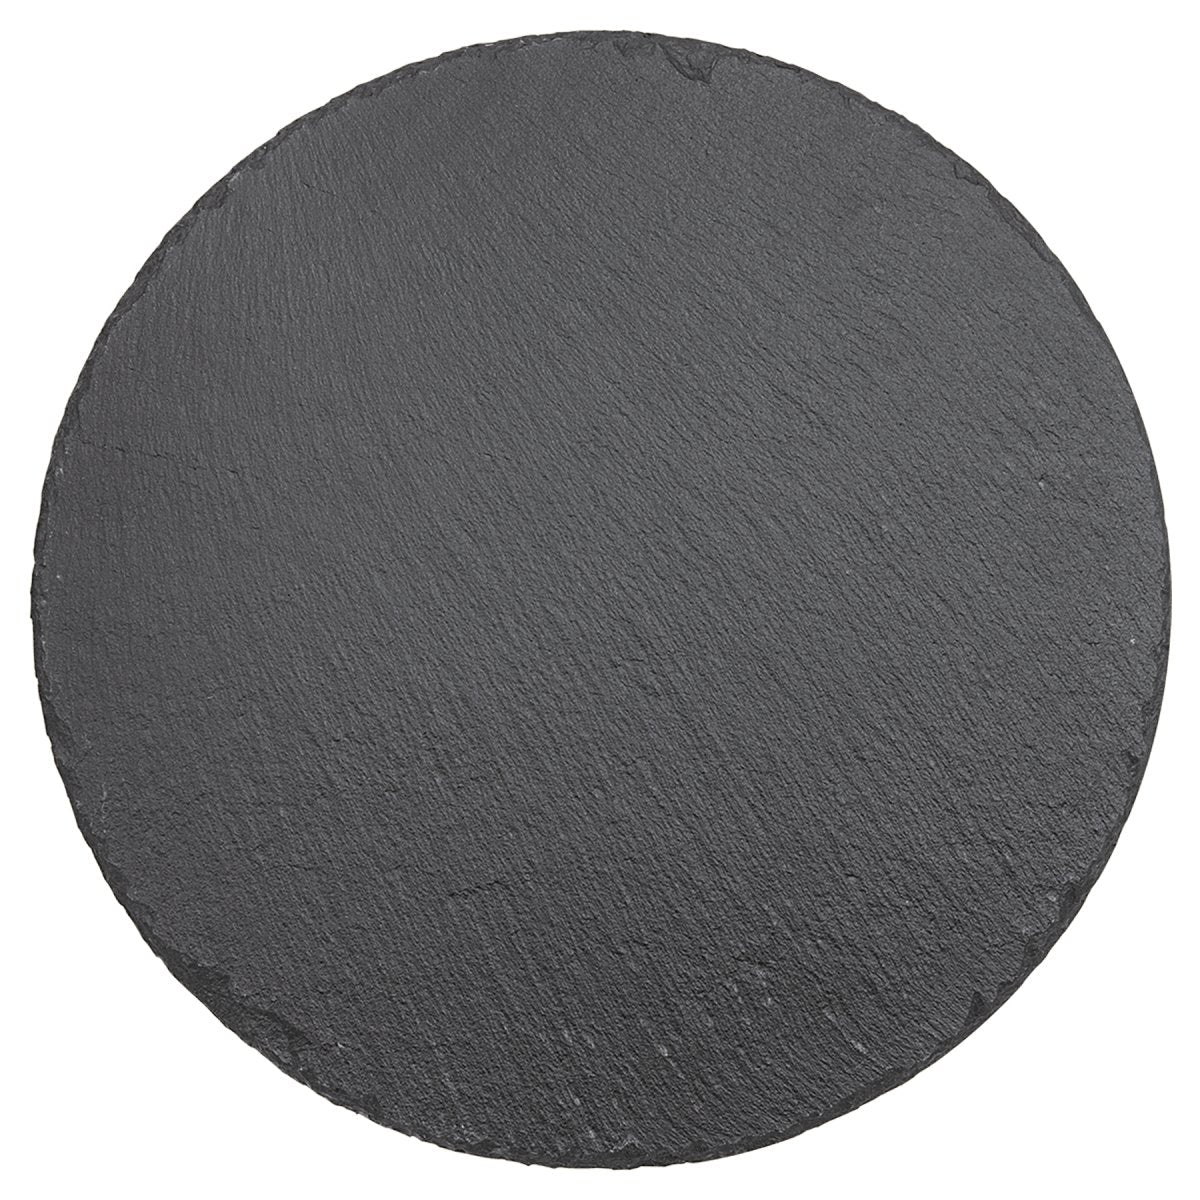 Laserable Slate Decor with Foam Pads, Round 9.75" - Inkfinitee Sublimation